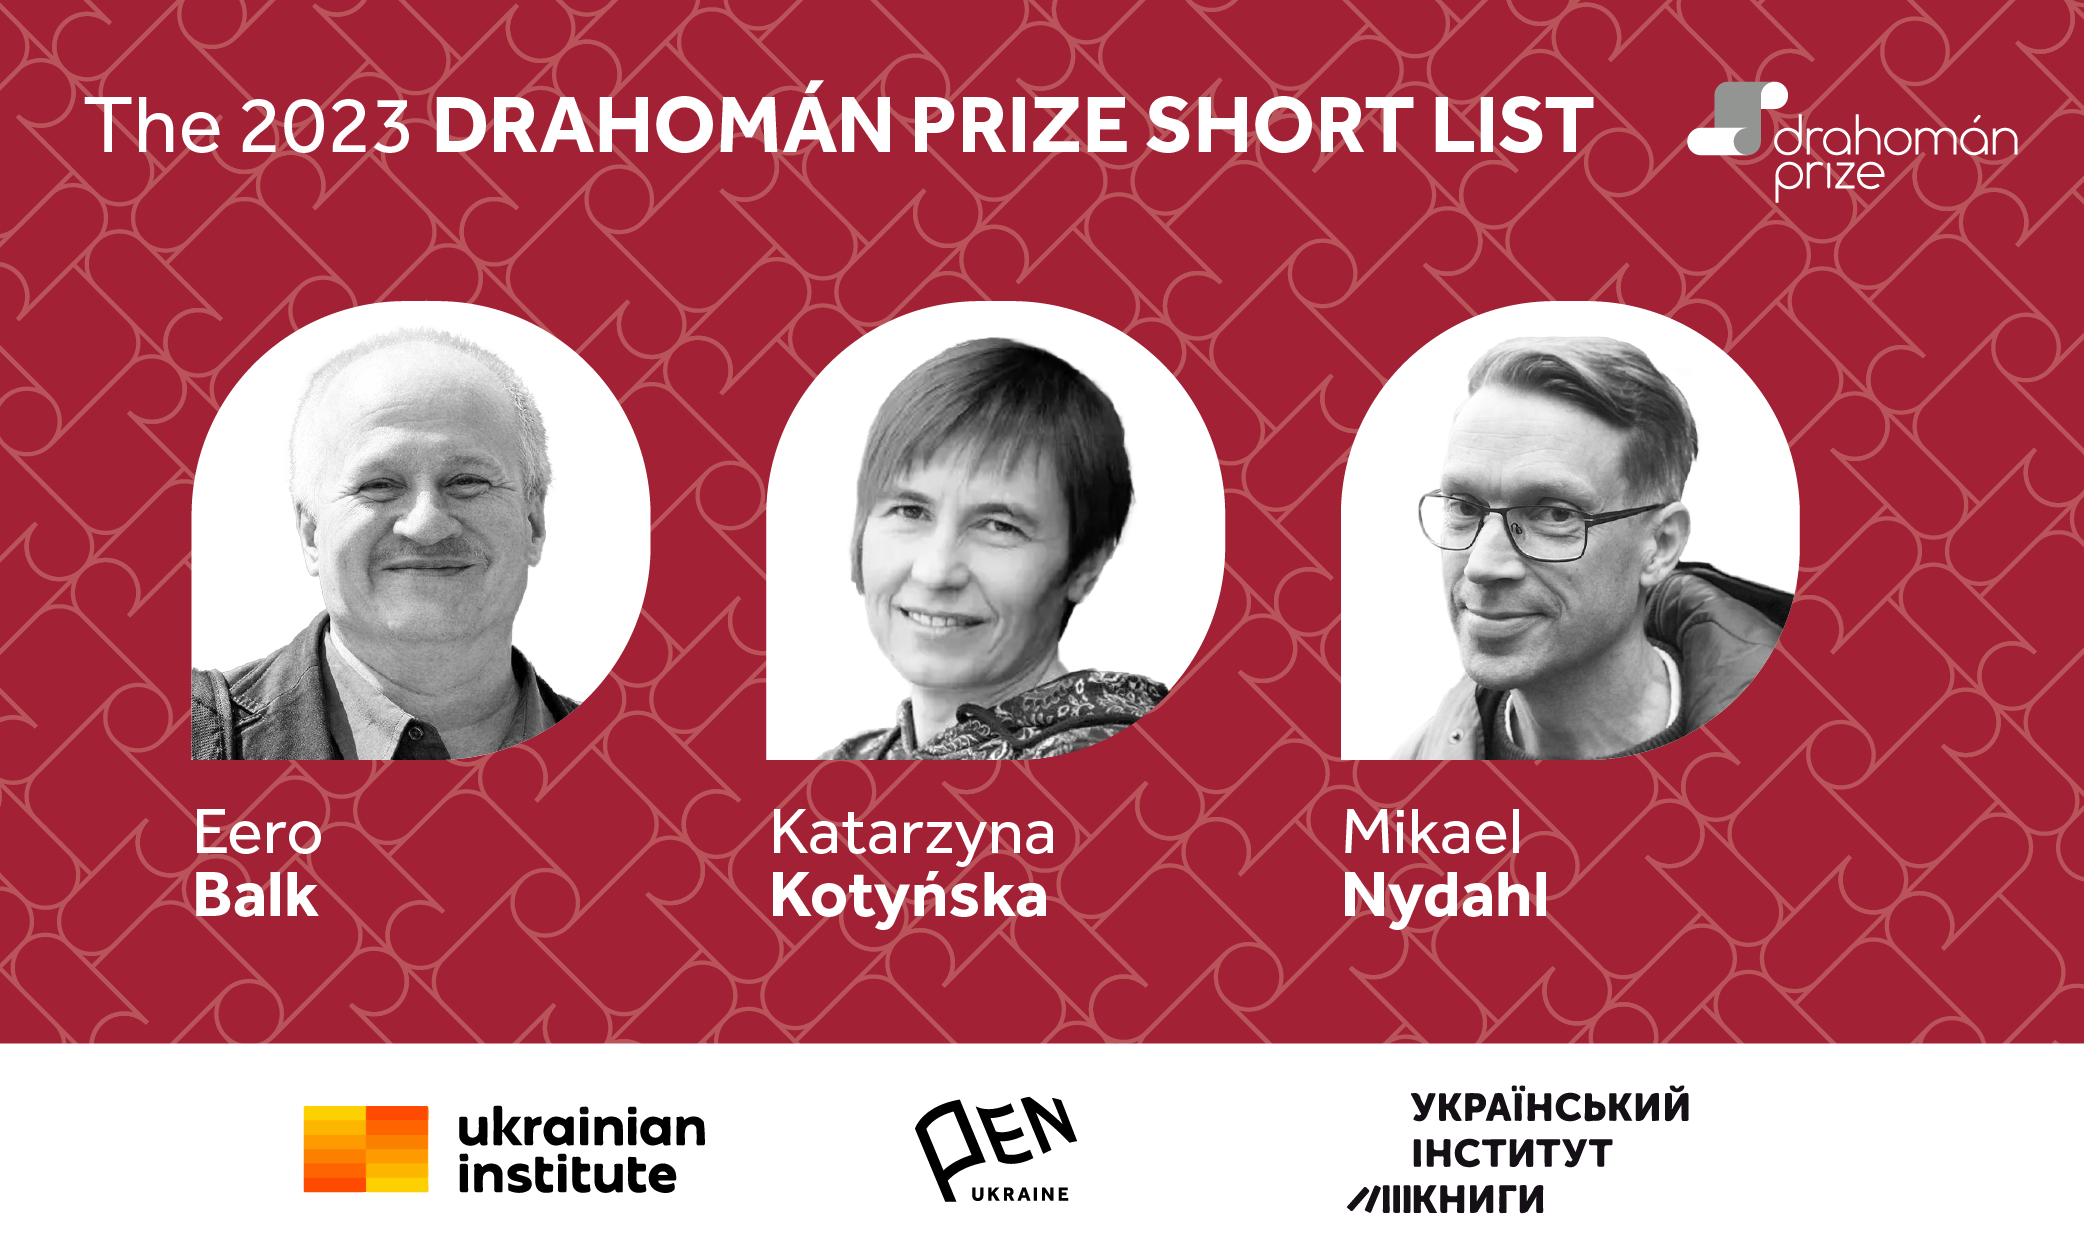 The 2023 Drahomán Prize short list has been announced